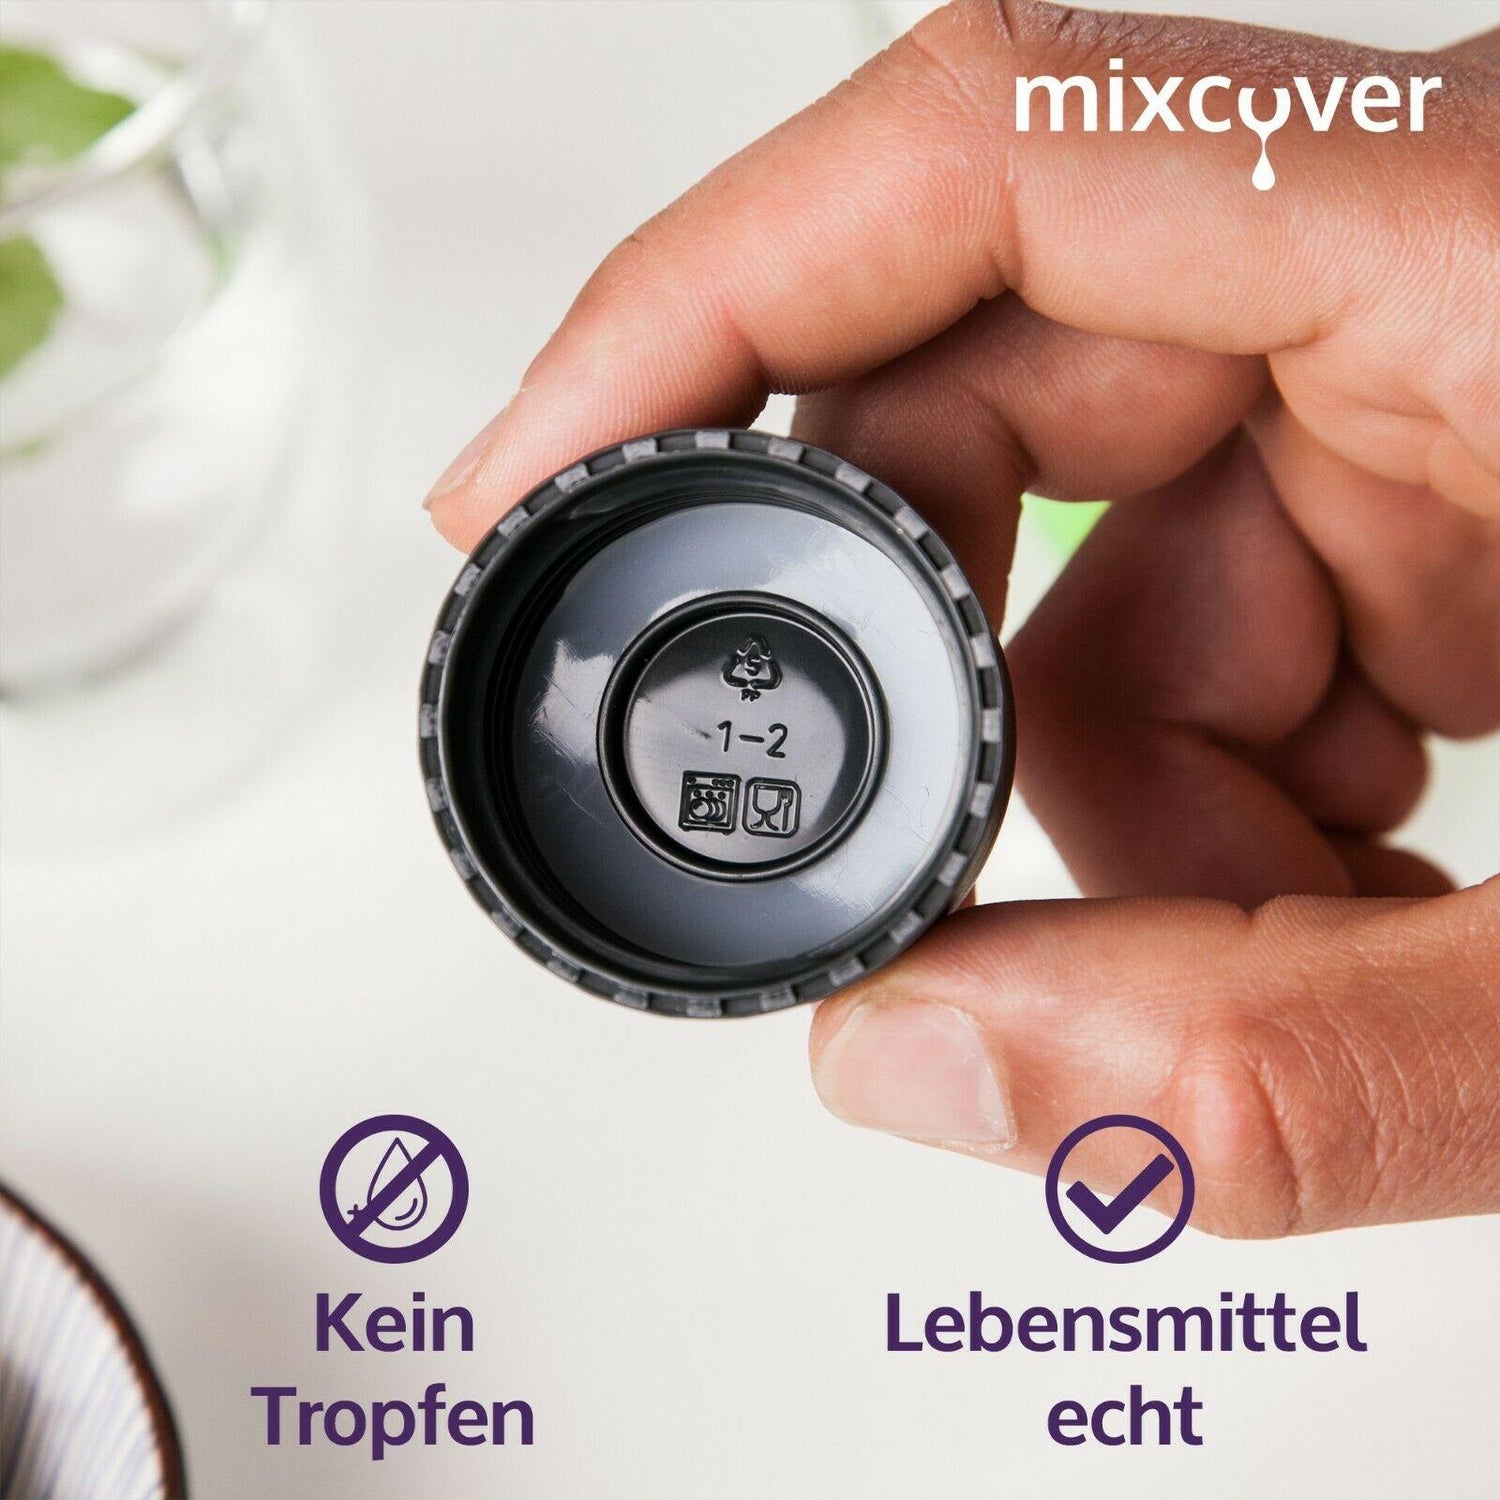 mixcover Ersatzdeckel passend für SodaStream PET Kunstoffflaschen 1er Set - Mixcover - Mixcover